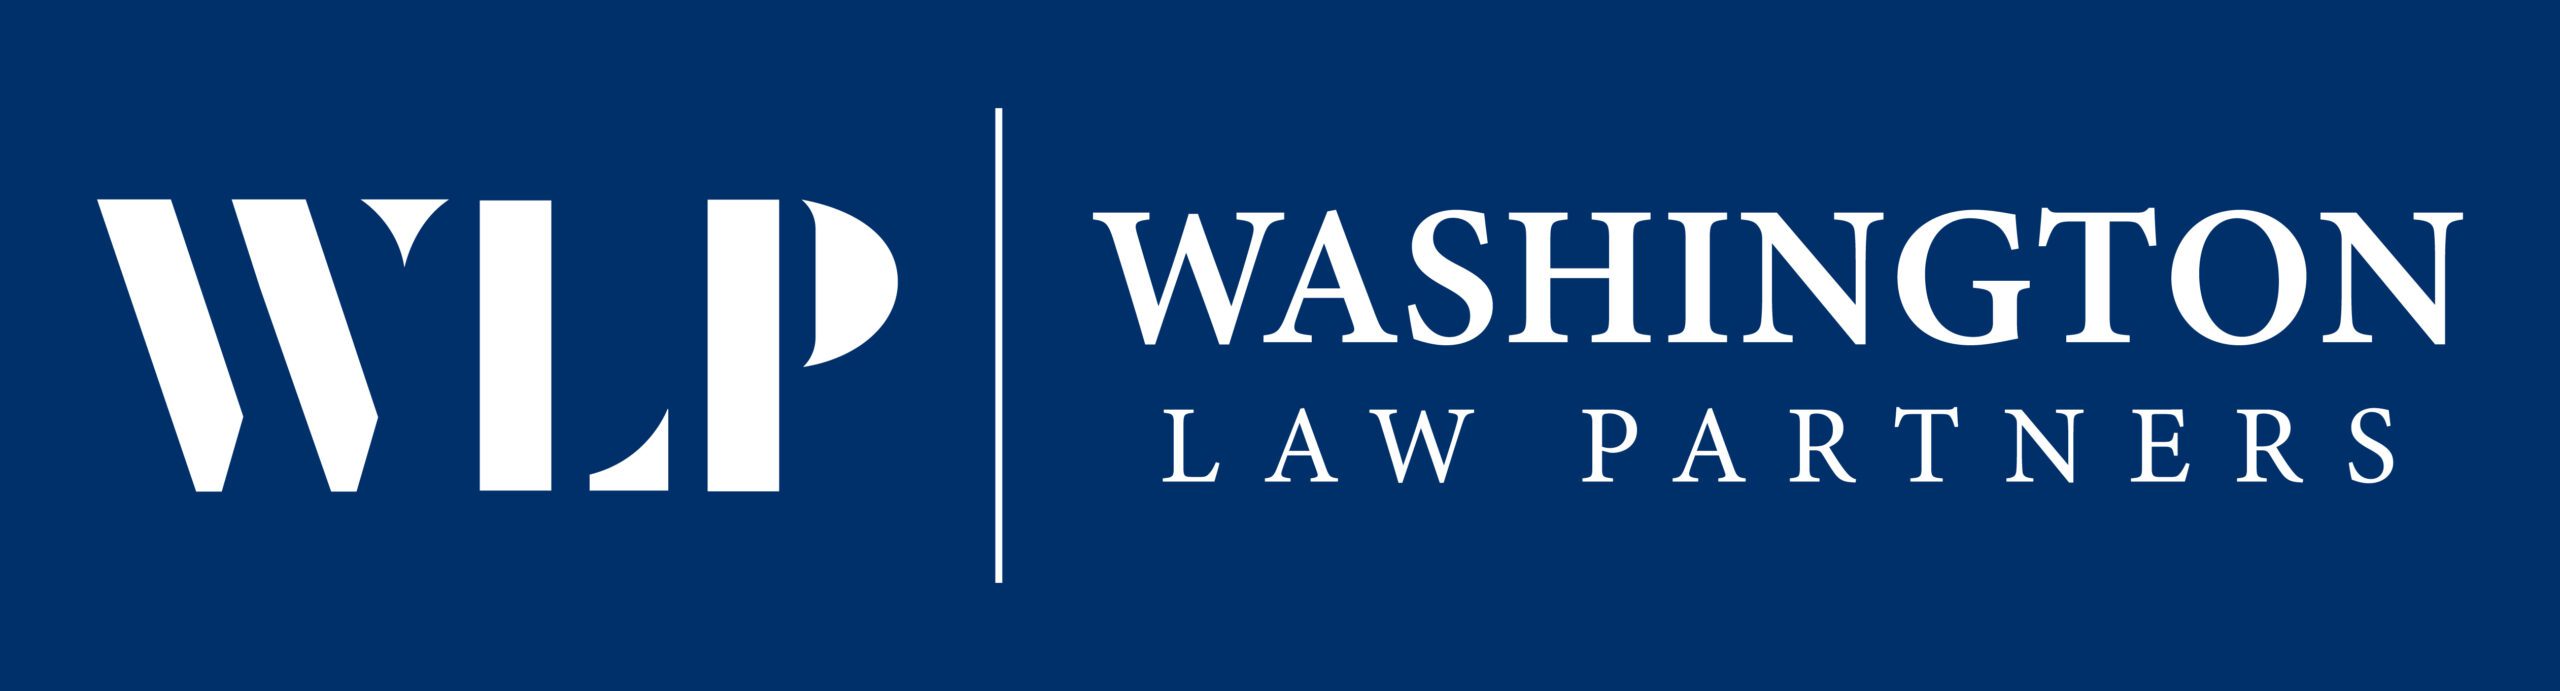 Washington DC Philanthropy Lawyer